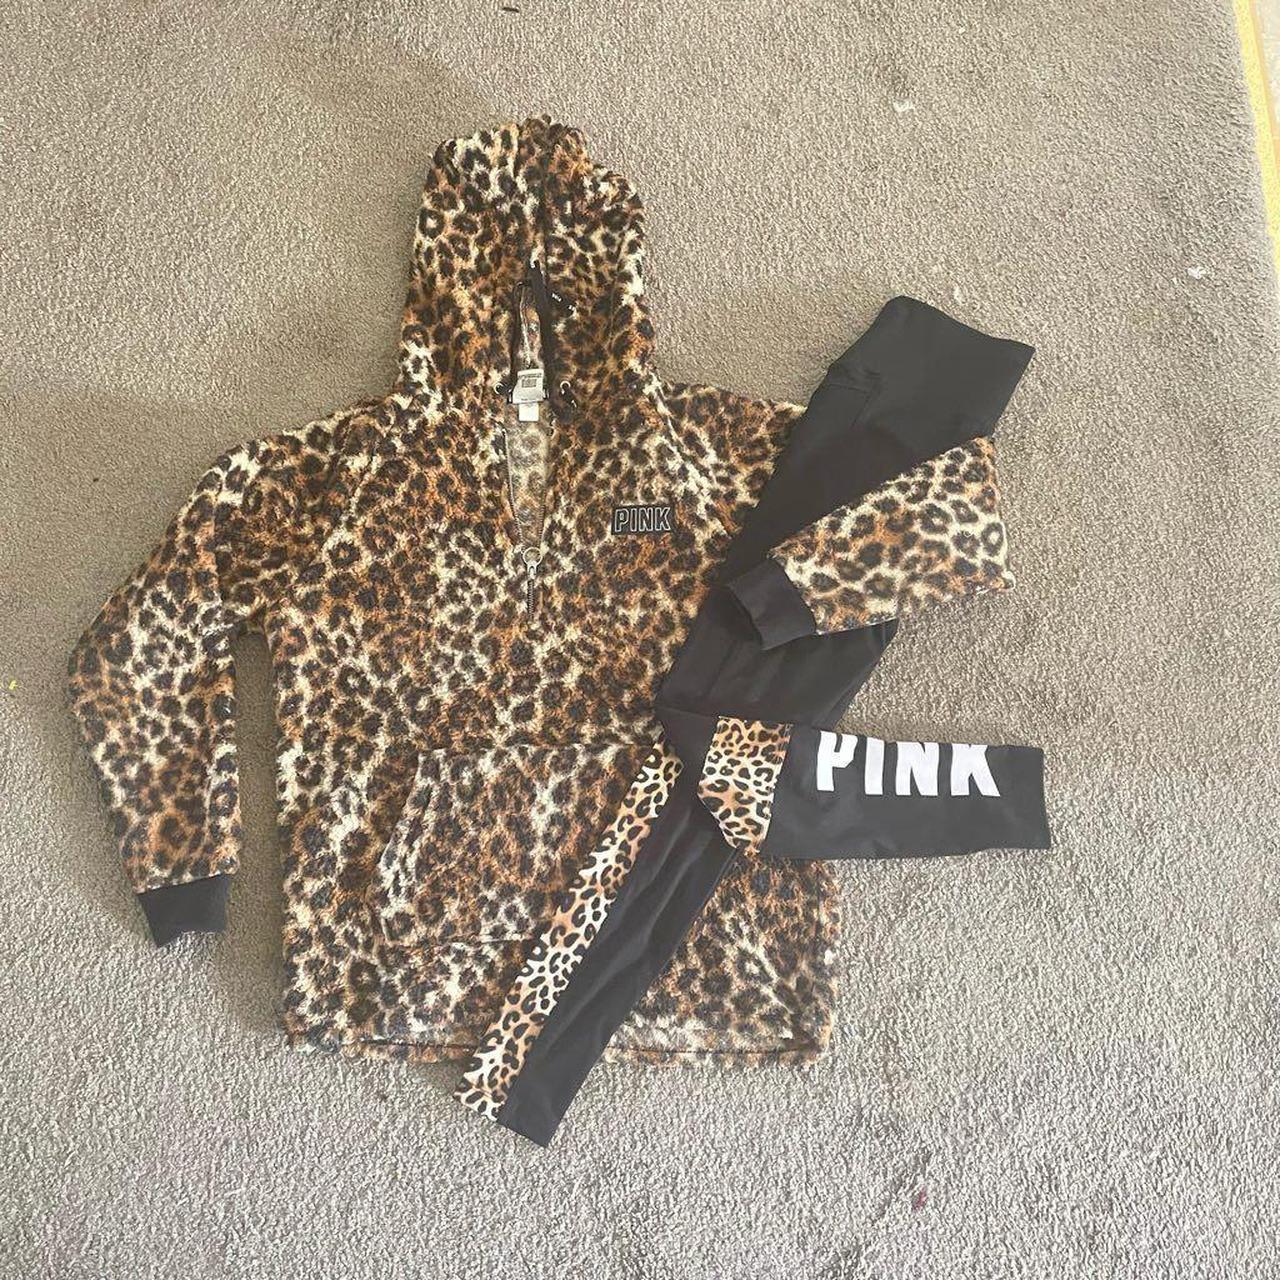 New Victoria's Secret Pink sherpa leopard animal cheetah print